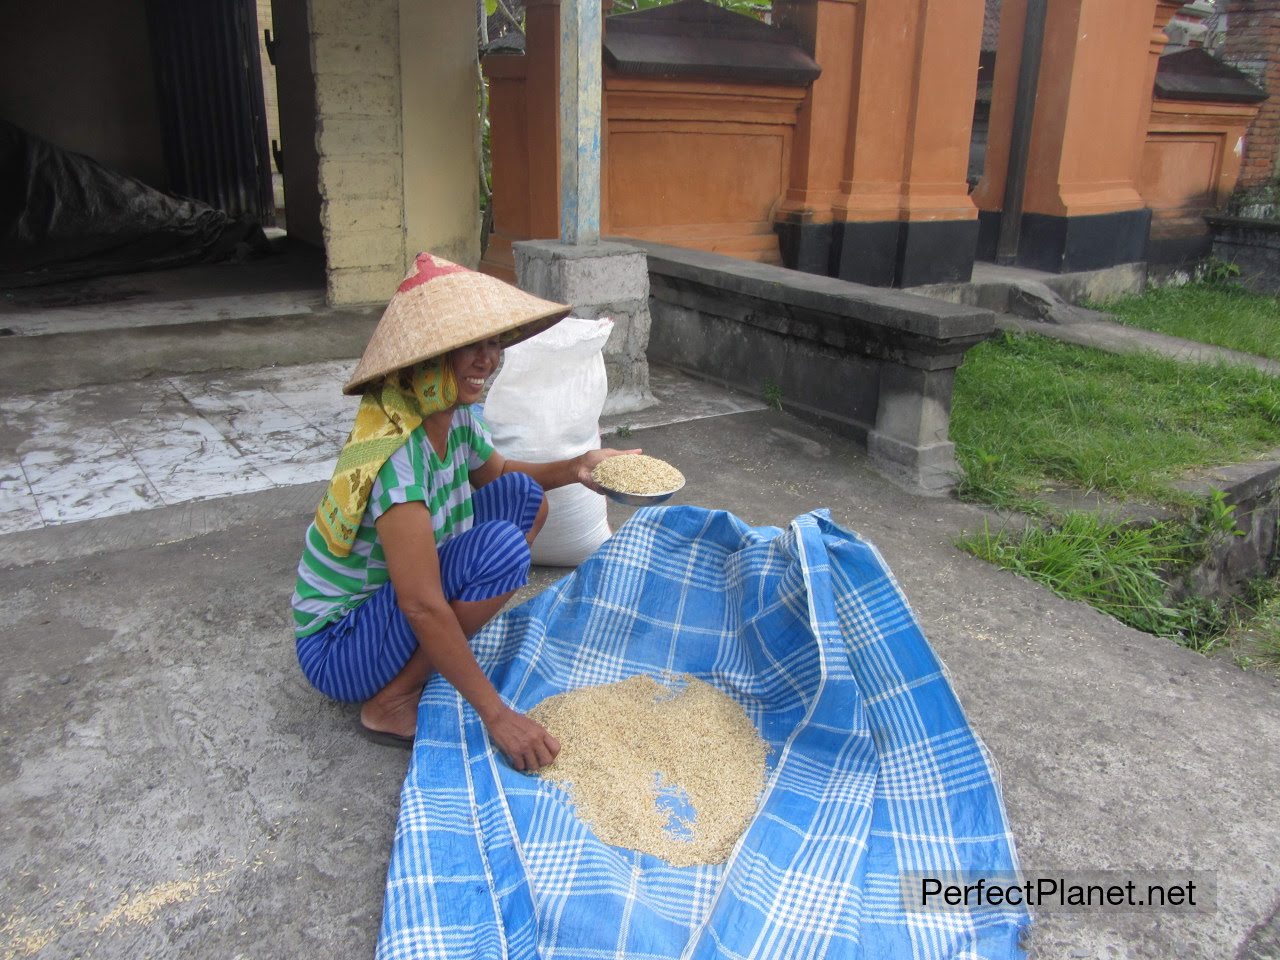 Spreading rice